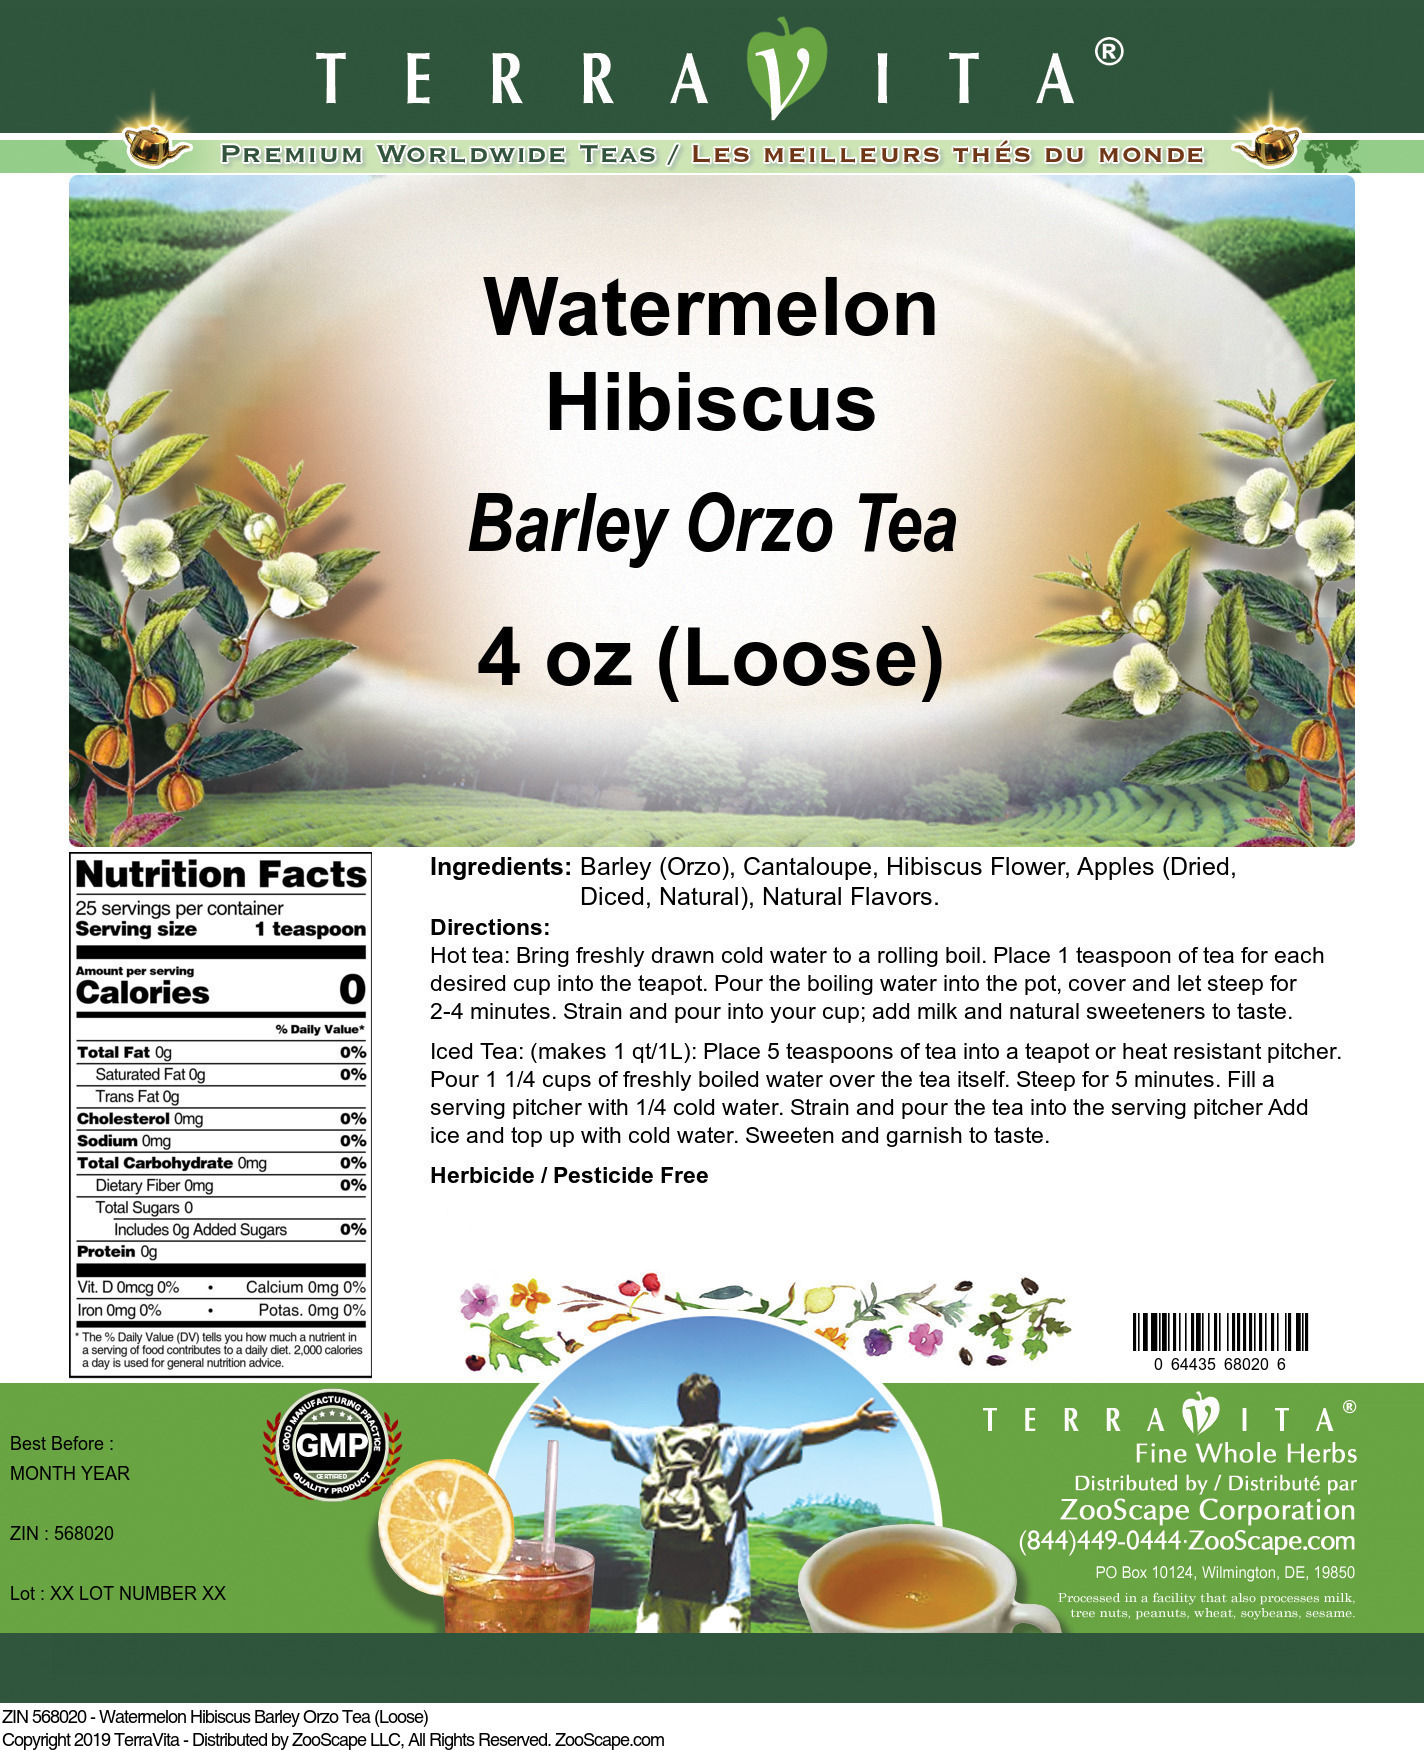 Watermelon Hibiscus Barley Orzo Tea (Loose) - Label